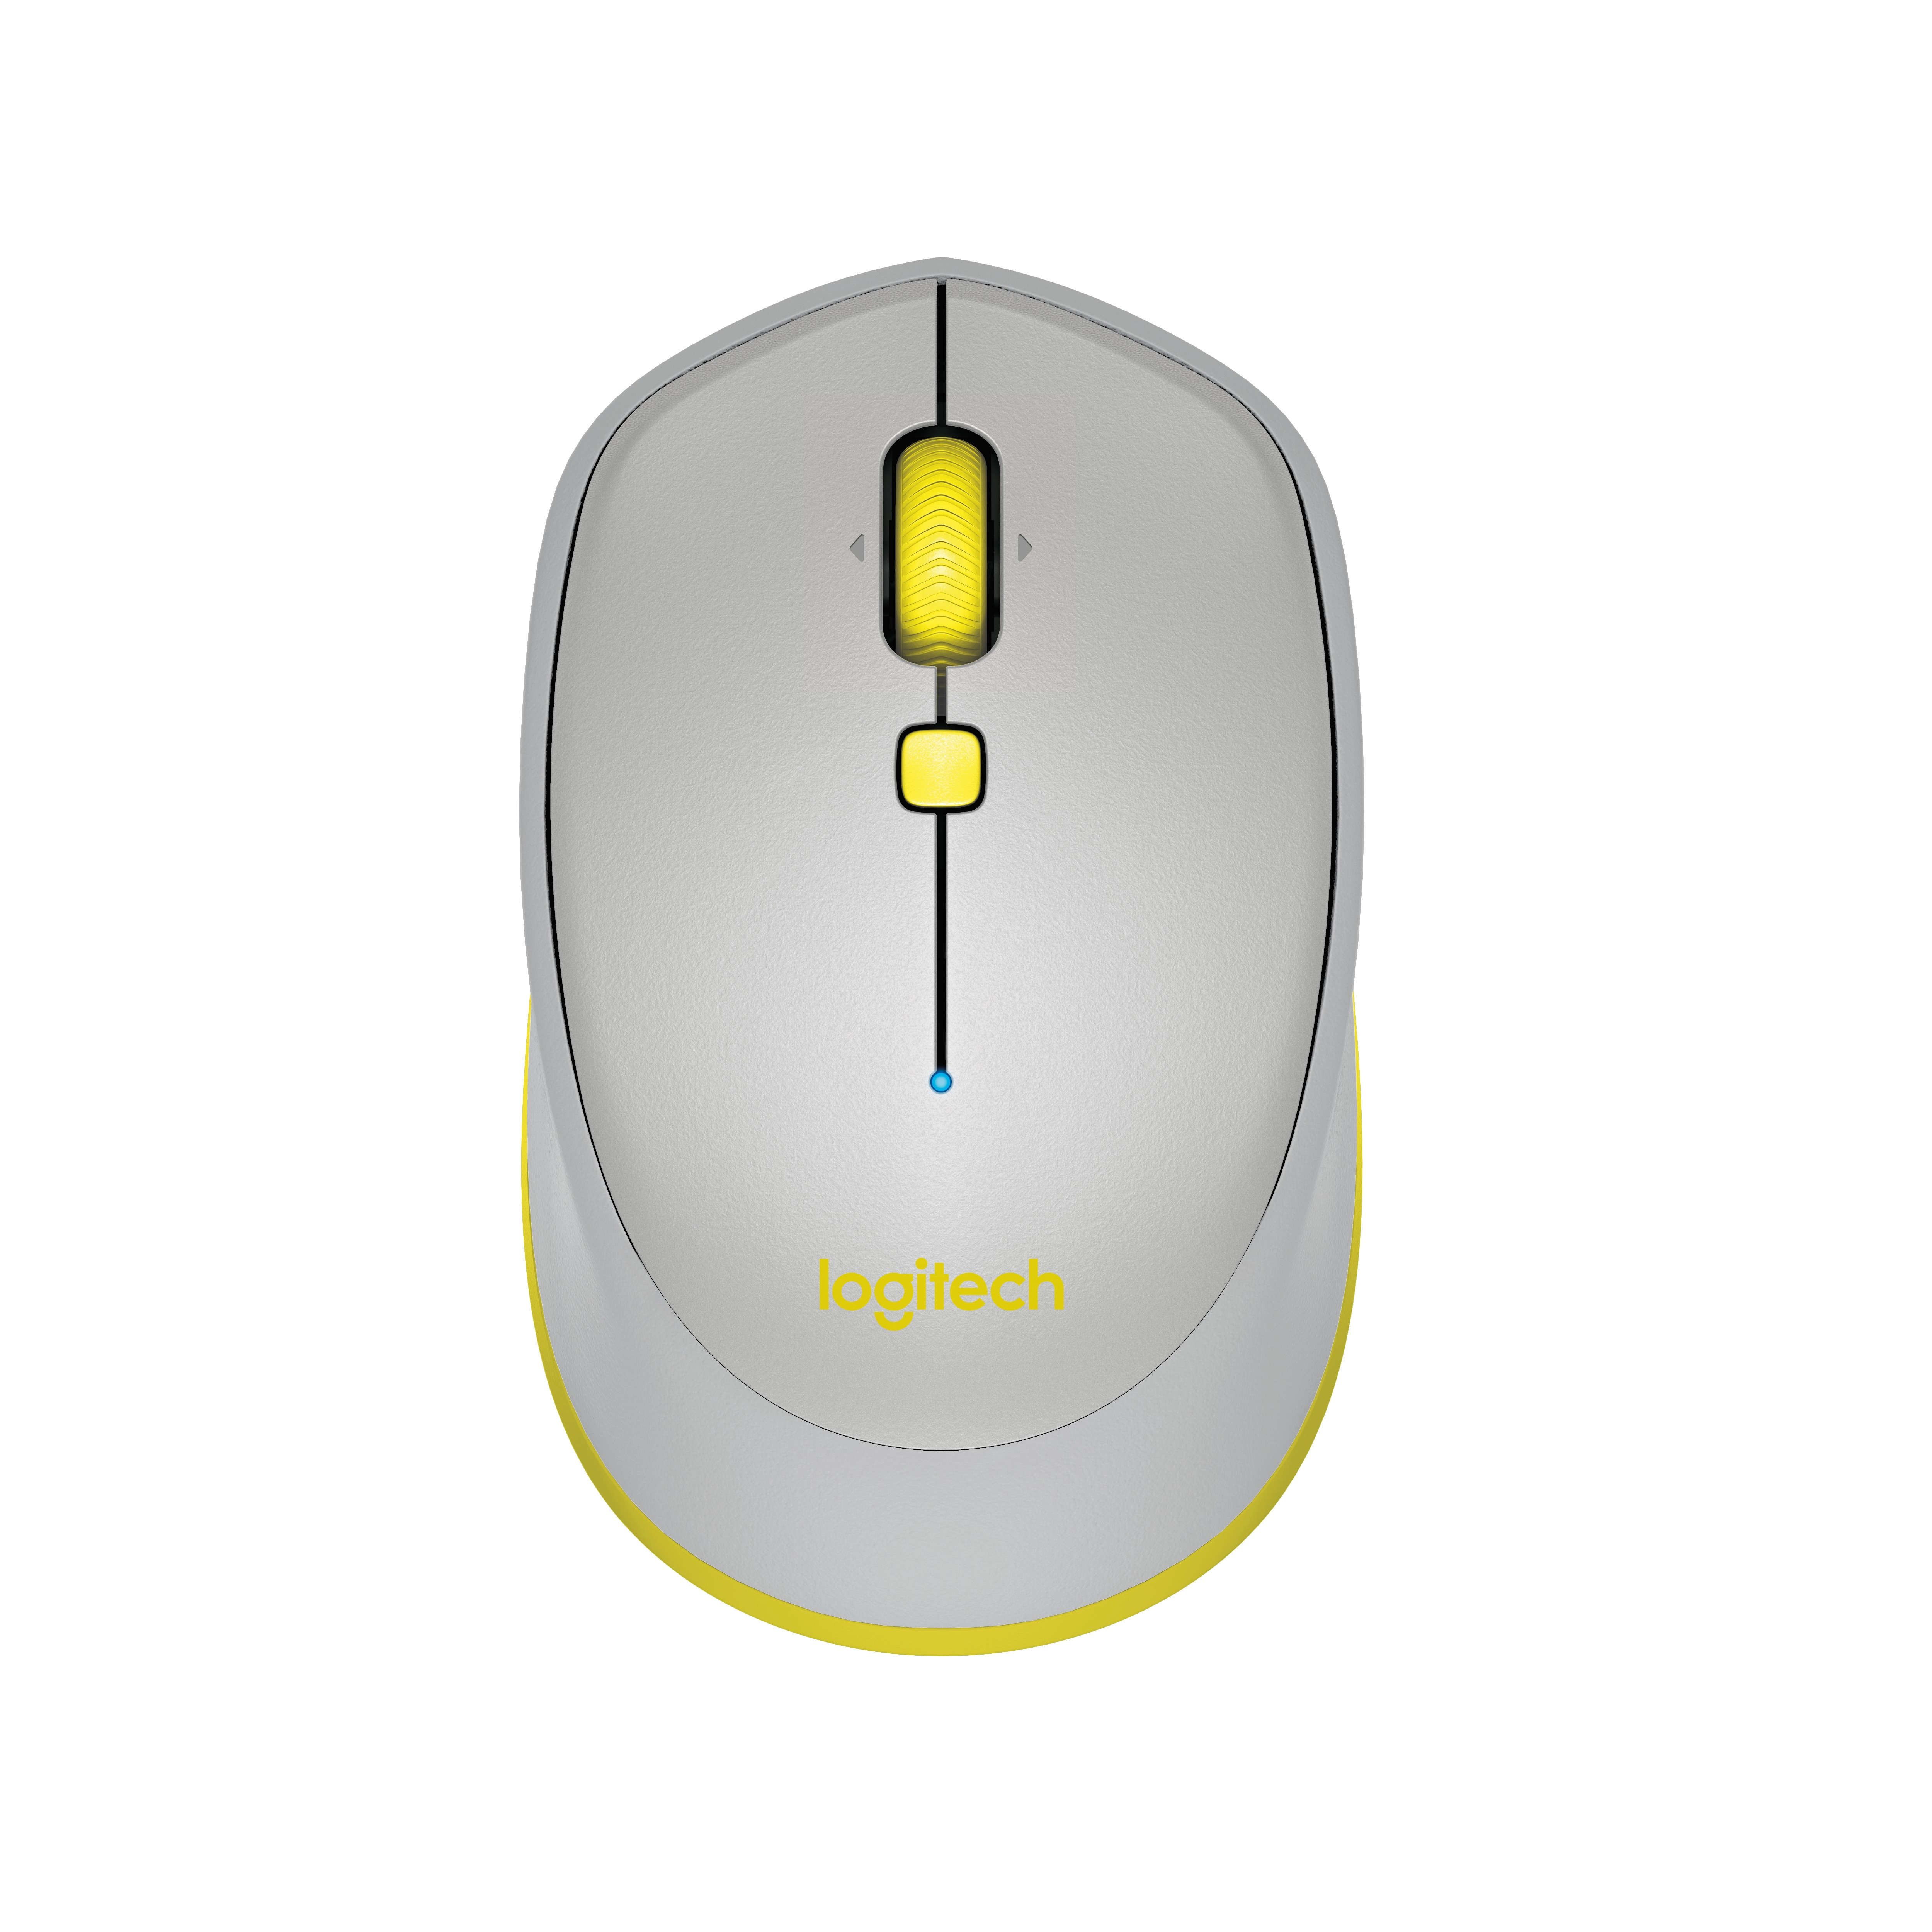 Logitech 910-004530 M535 Bluetooth Optical Mouse Grey/Yellow Ambidextrous